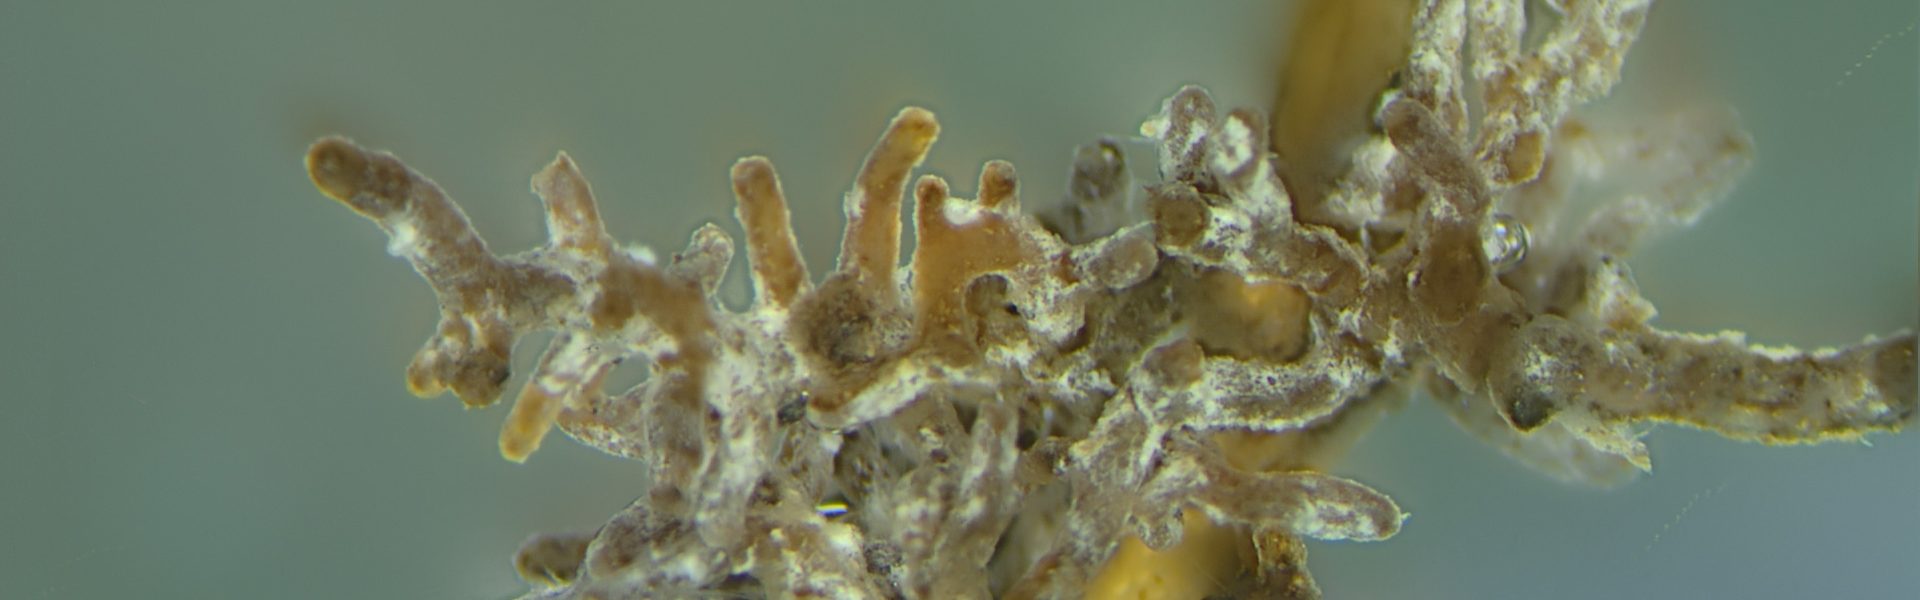 A close up of fungal mycelia